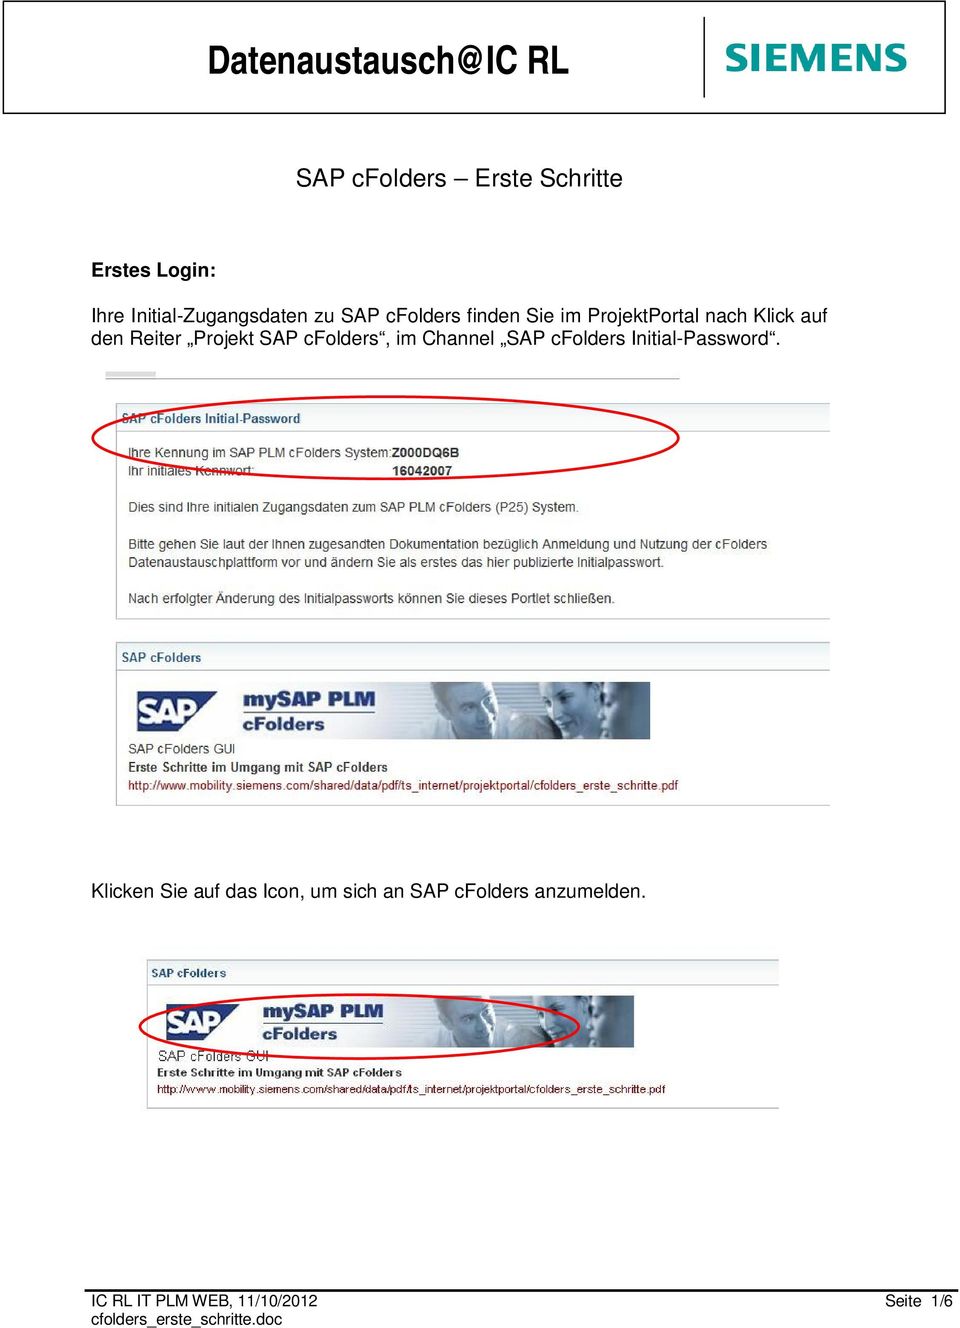 den Reiter Projekt SAP cfolders, im Channel SAP cfolders Initial-Password.